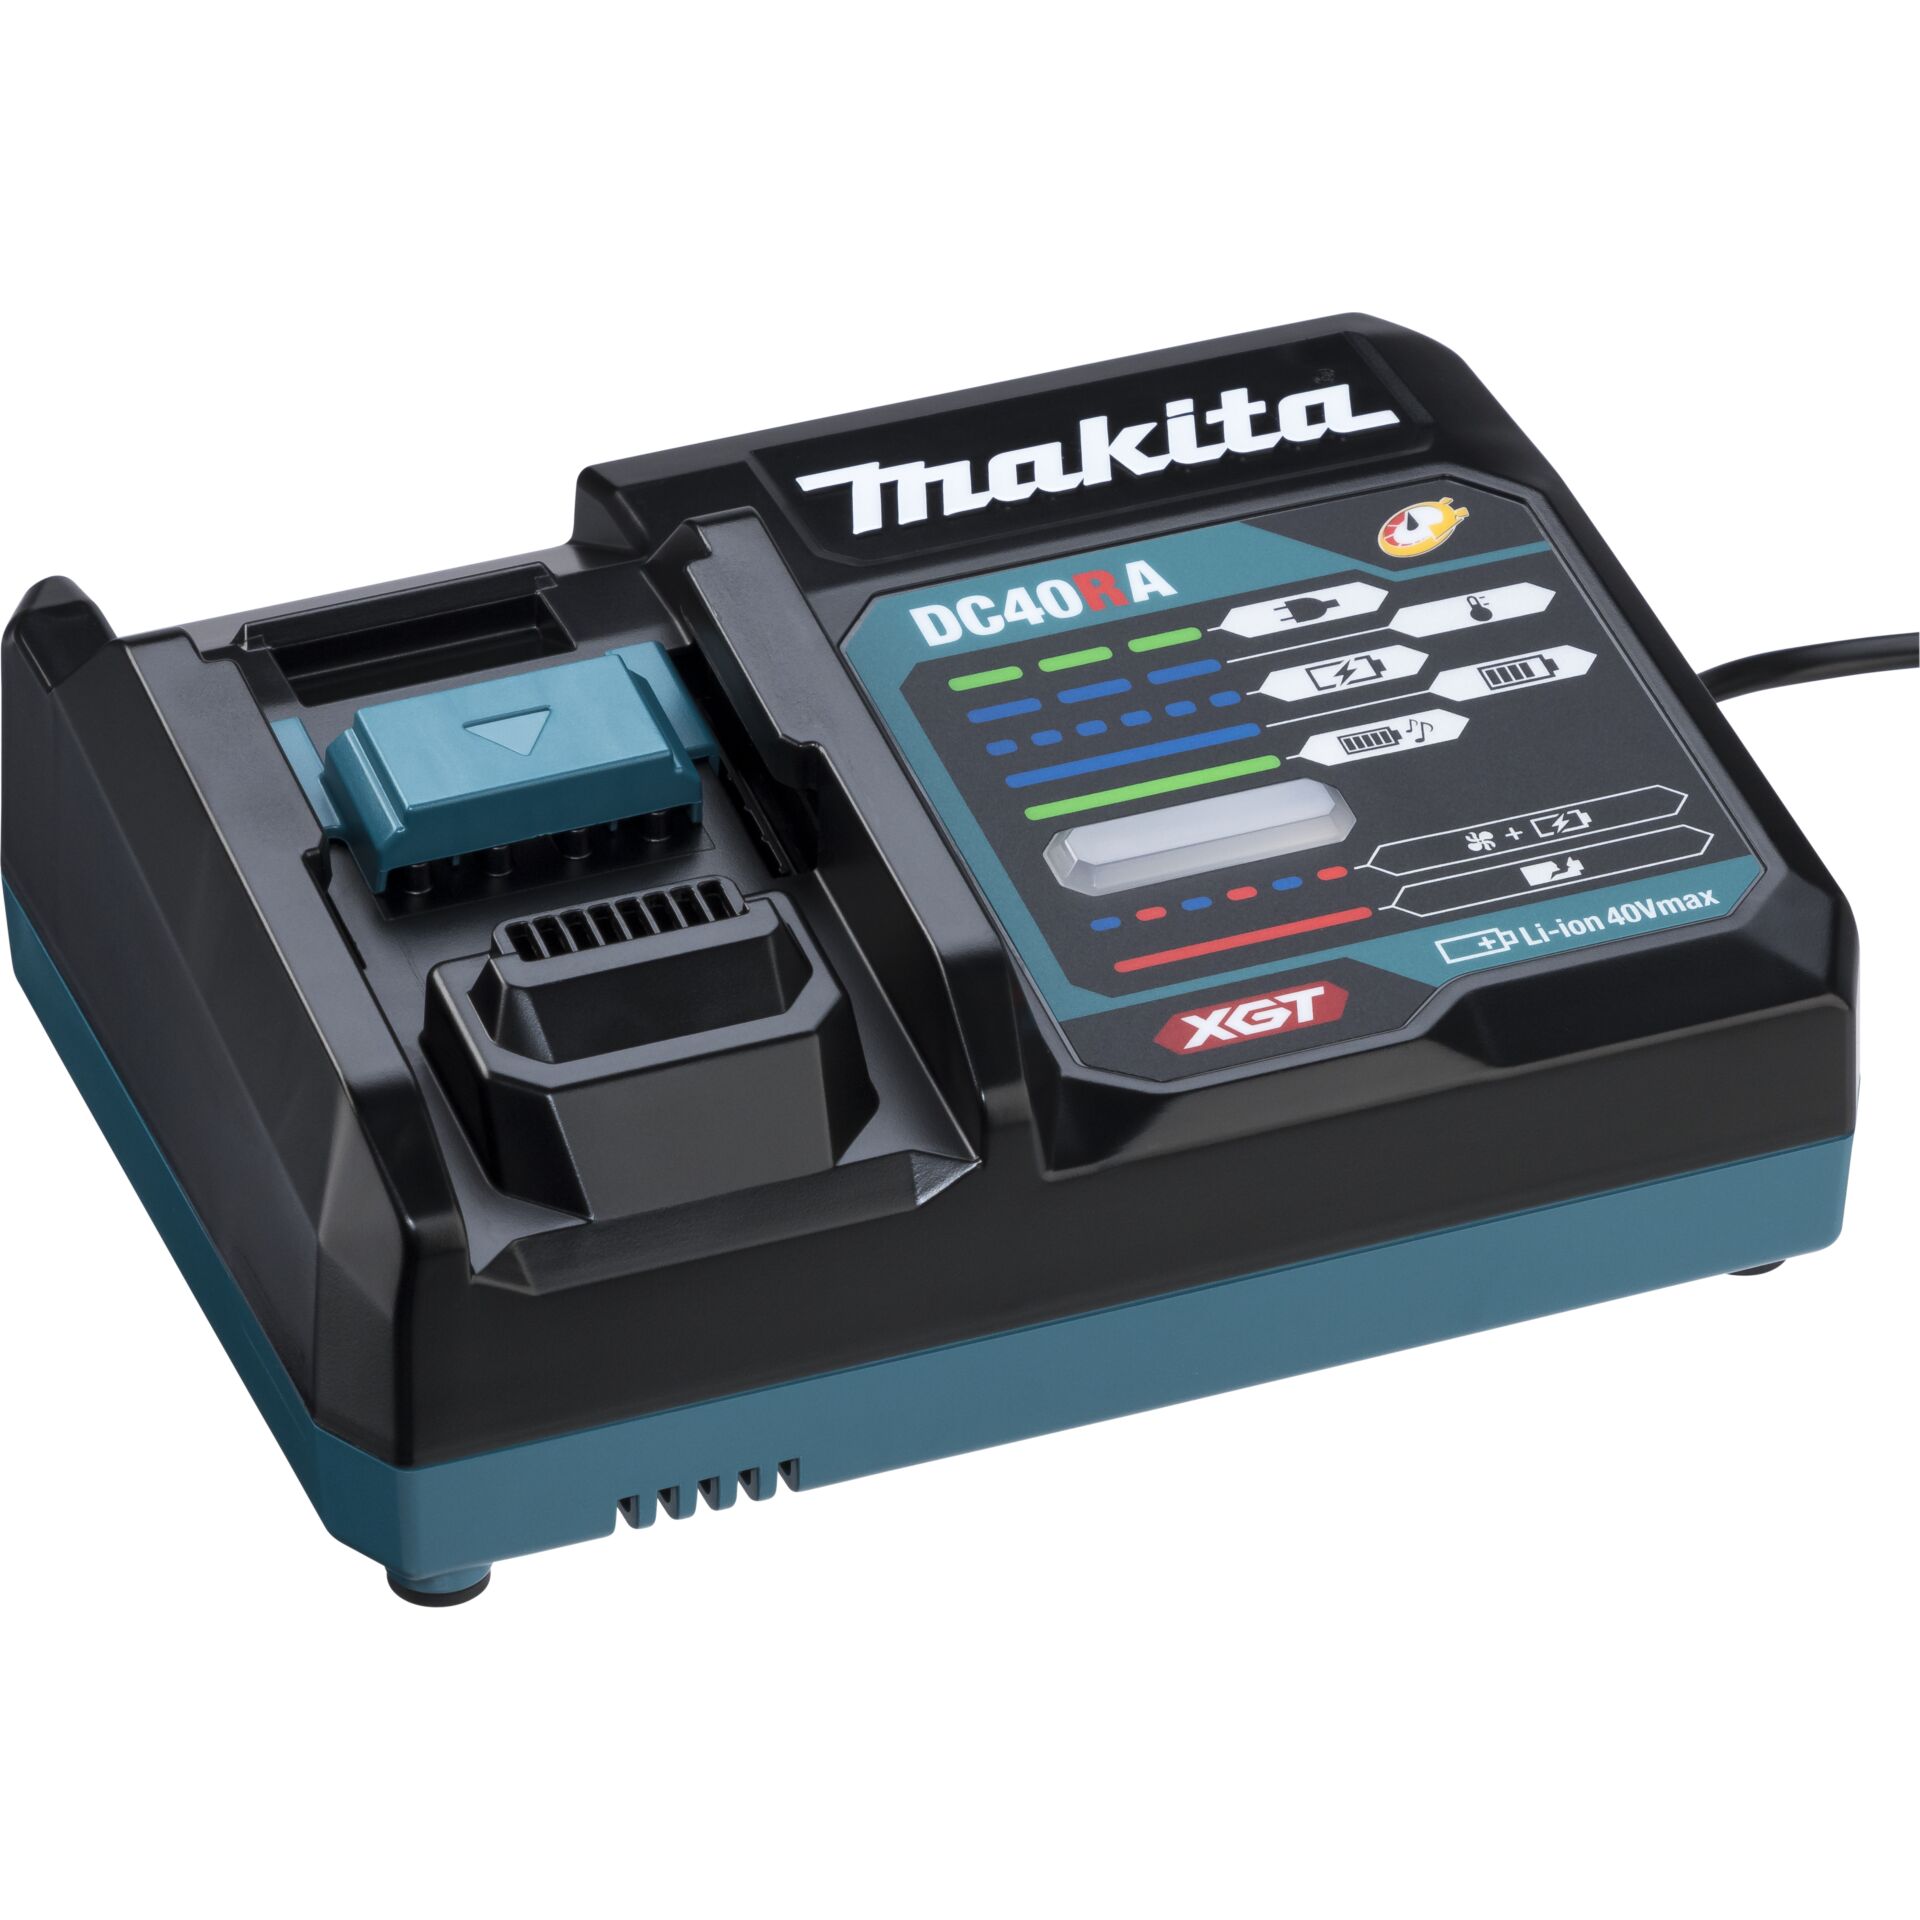 Makita DC40RA XGT Schnellladegerät für 40V max. XGT-Akkus